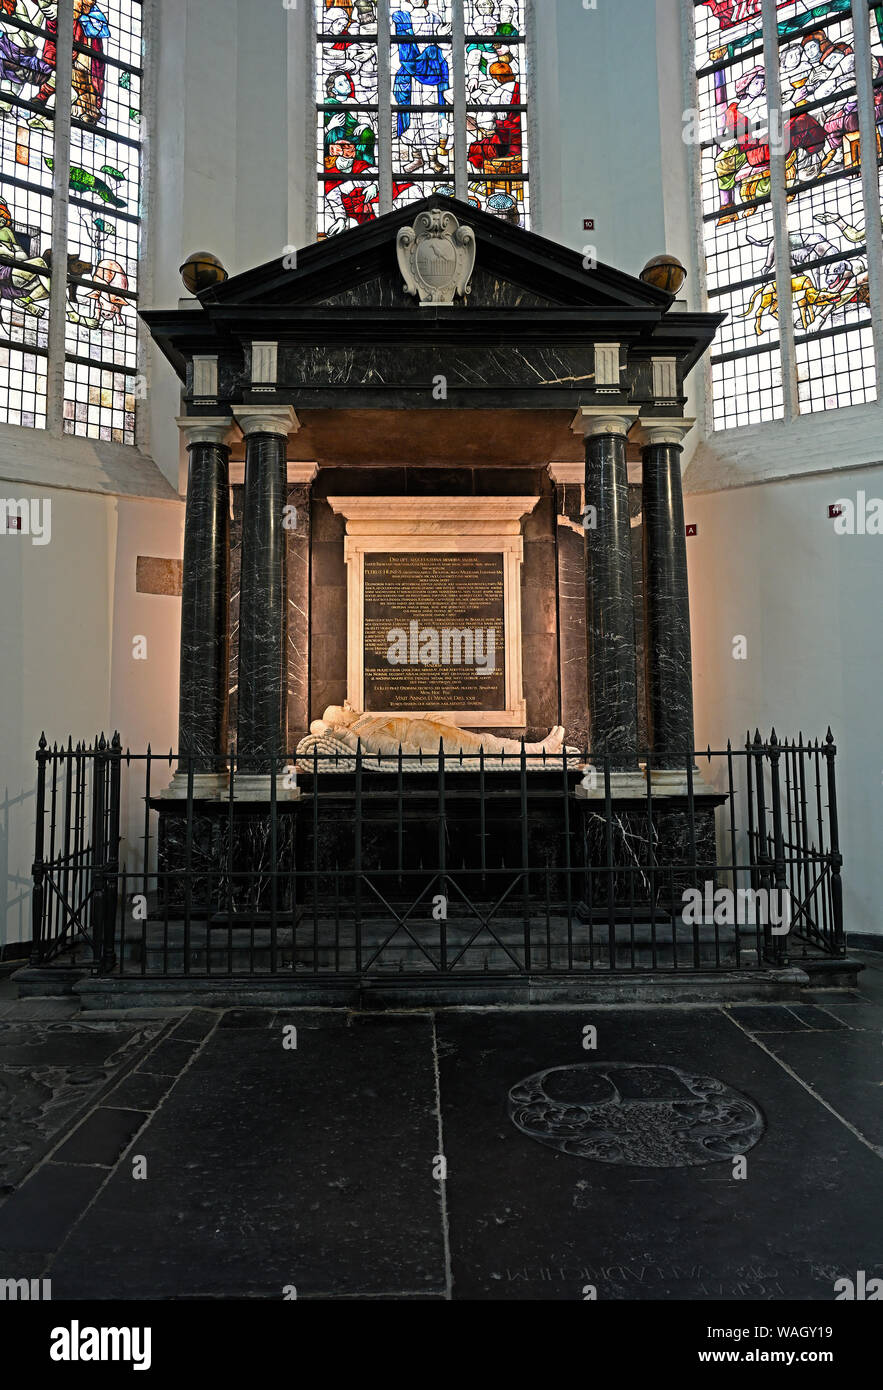 delft, paesi bassi - 2019.08.09: tomba dell'ammiraglio piet pieterszoon heyn (piet hein) (1577-1629) nella vecchia chiesa (oude kerk) Foto Stock